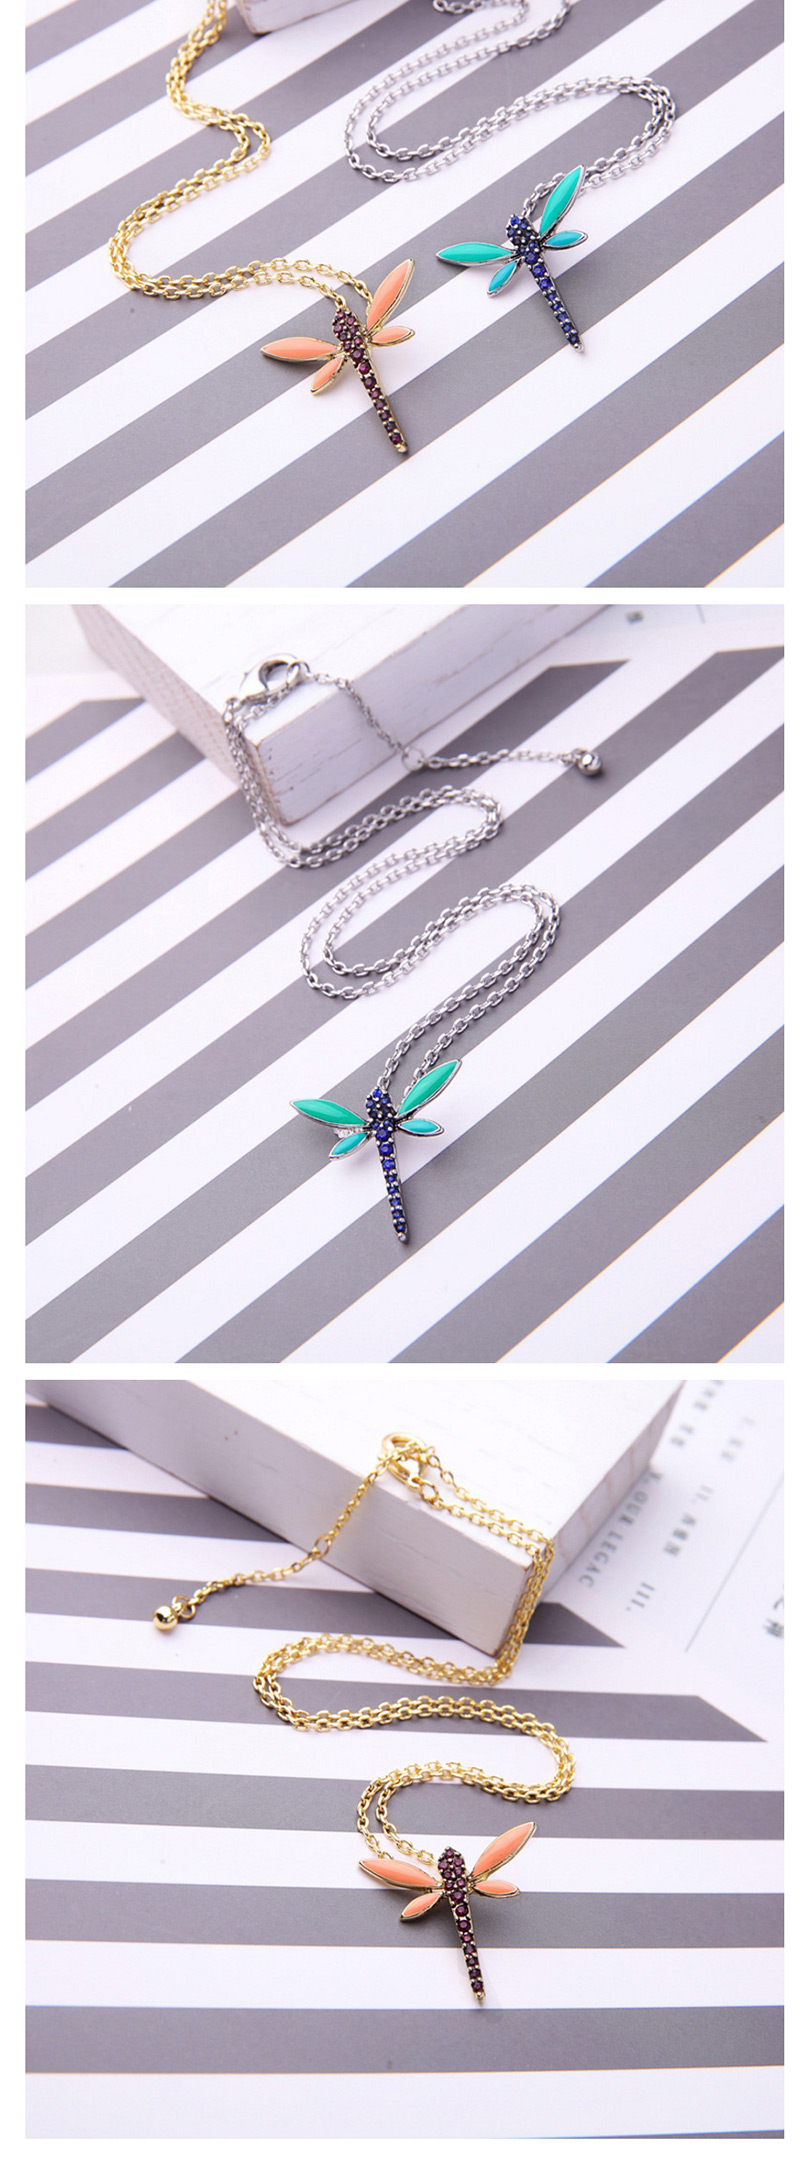 Elegant Silver Color Dragonfly Pendant Decorated Necklace,Pendants